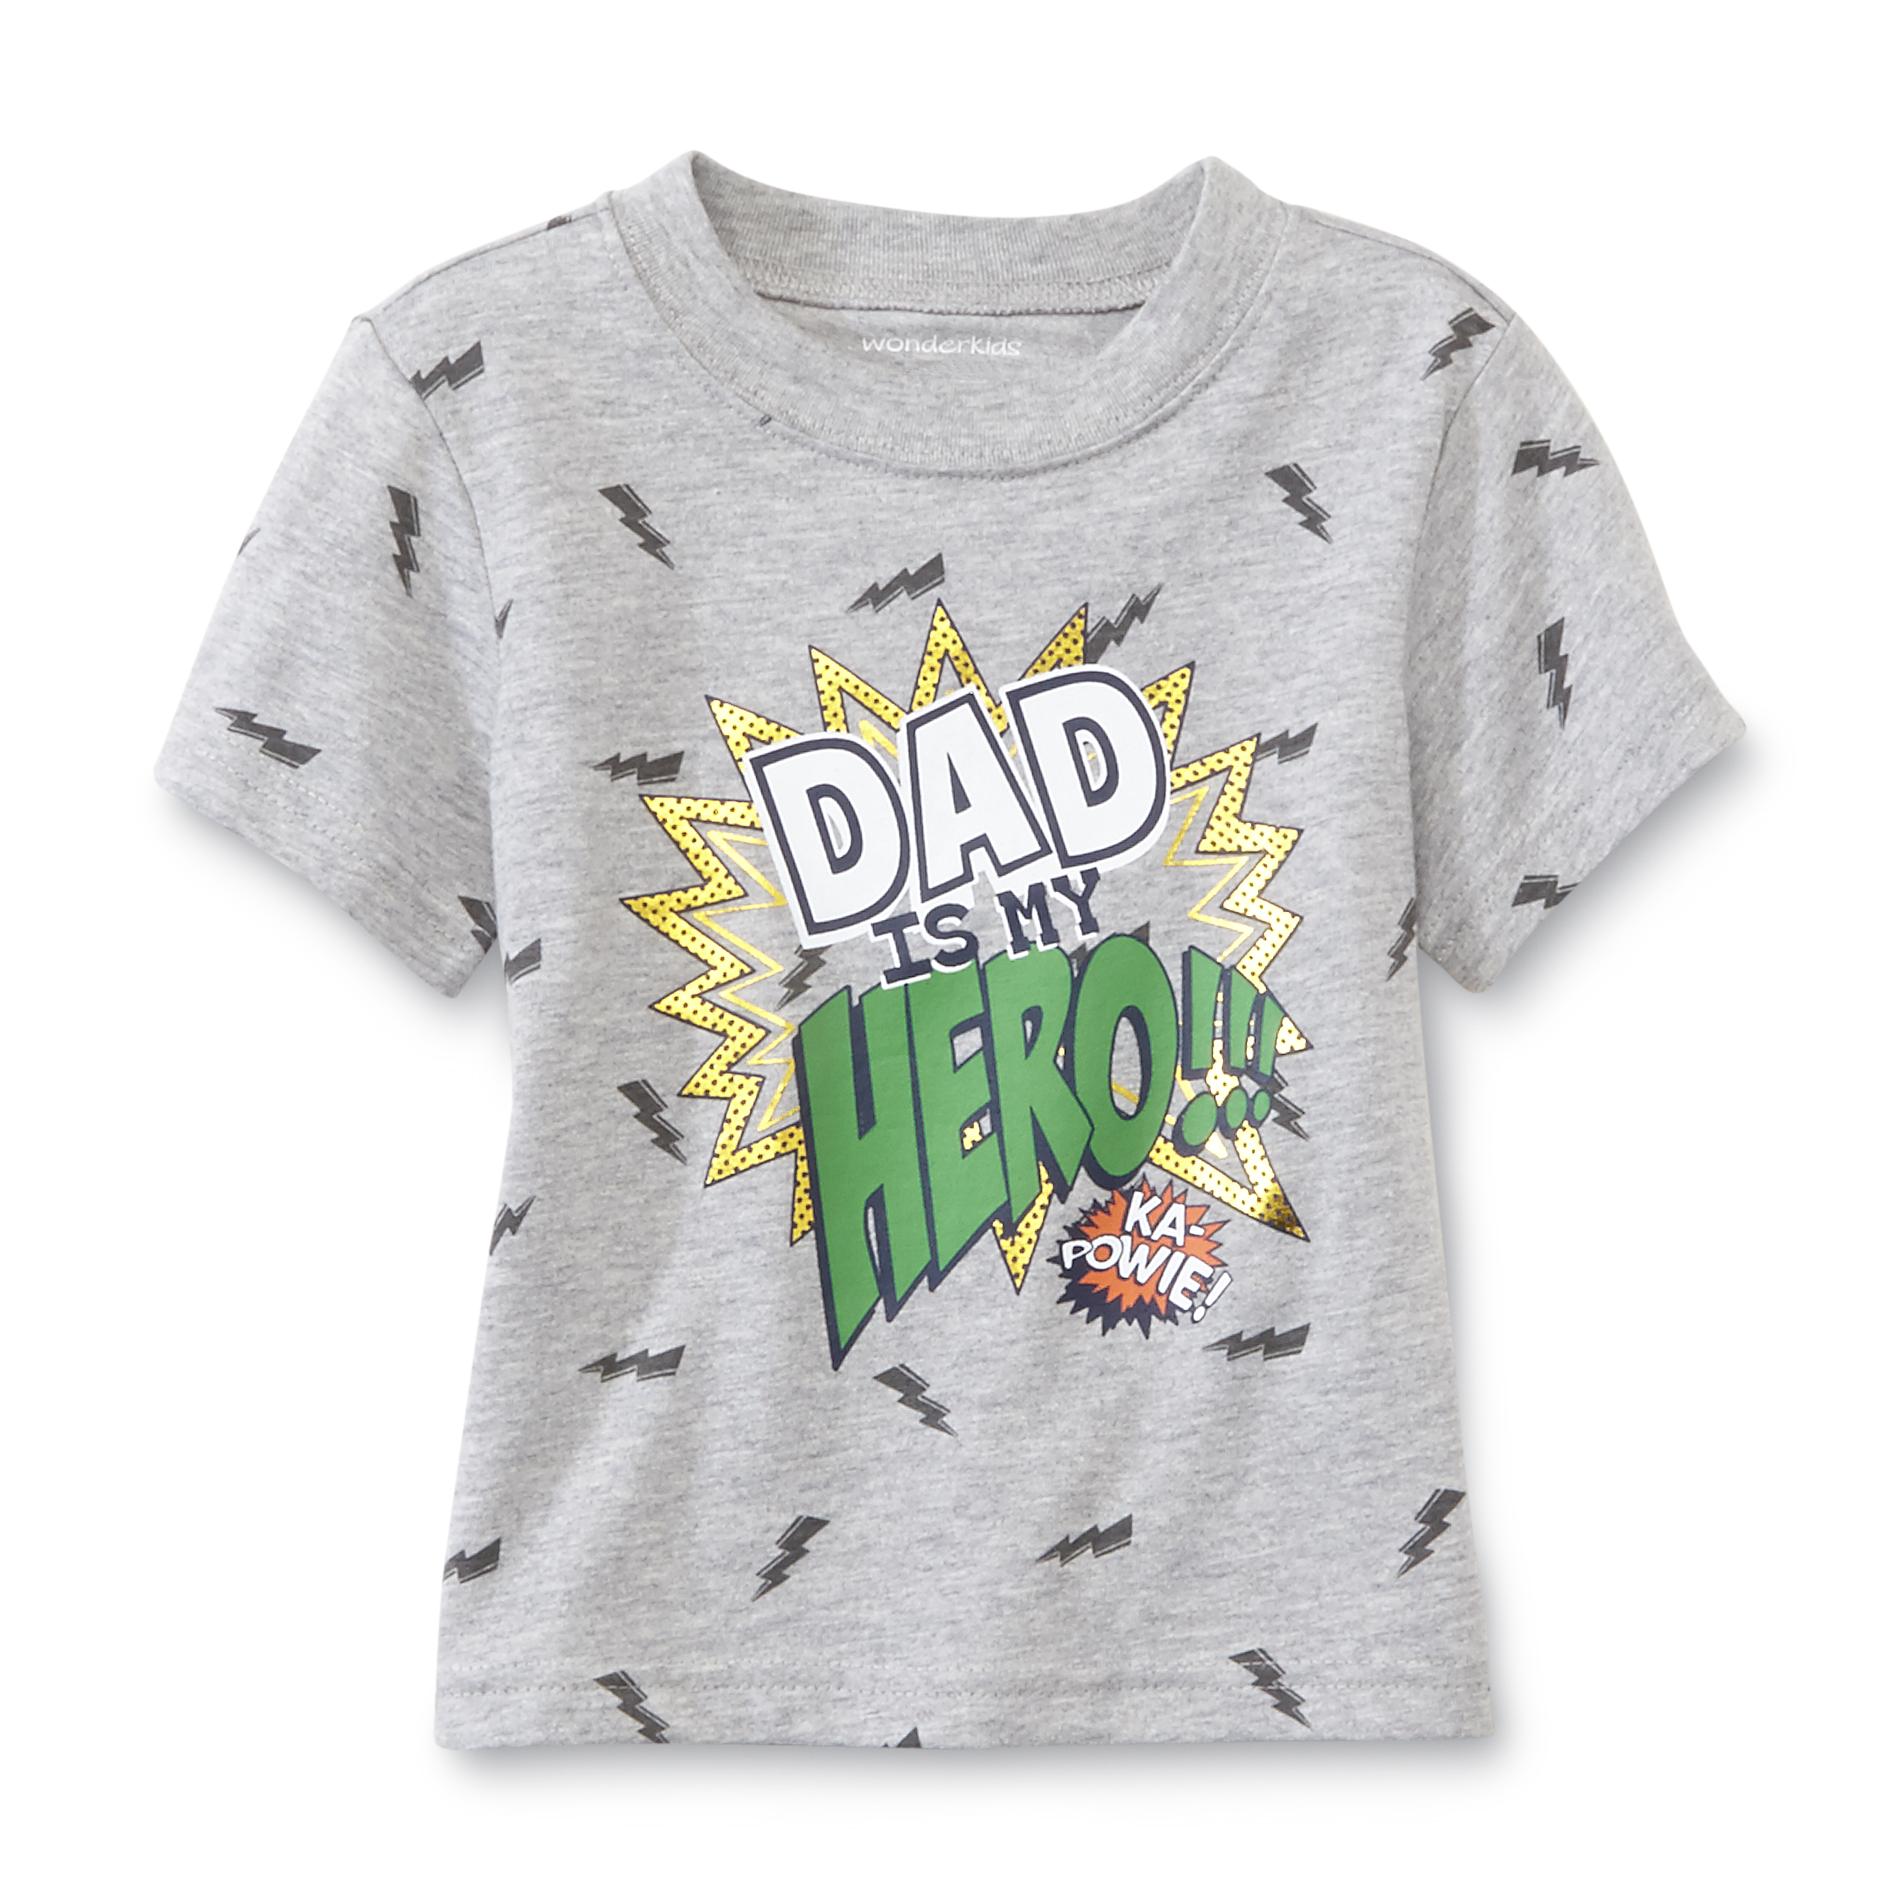 WonderKids Infant & Toddler Boy's Graphic T-Shirt - Dad Is My Hero